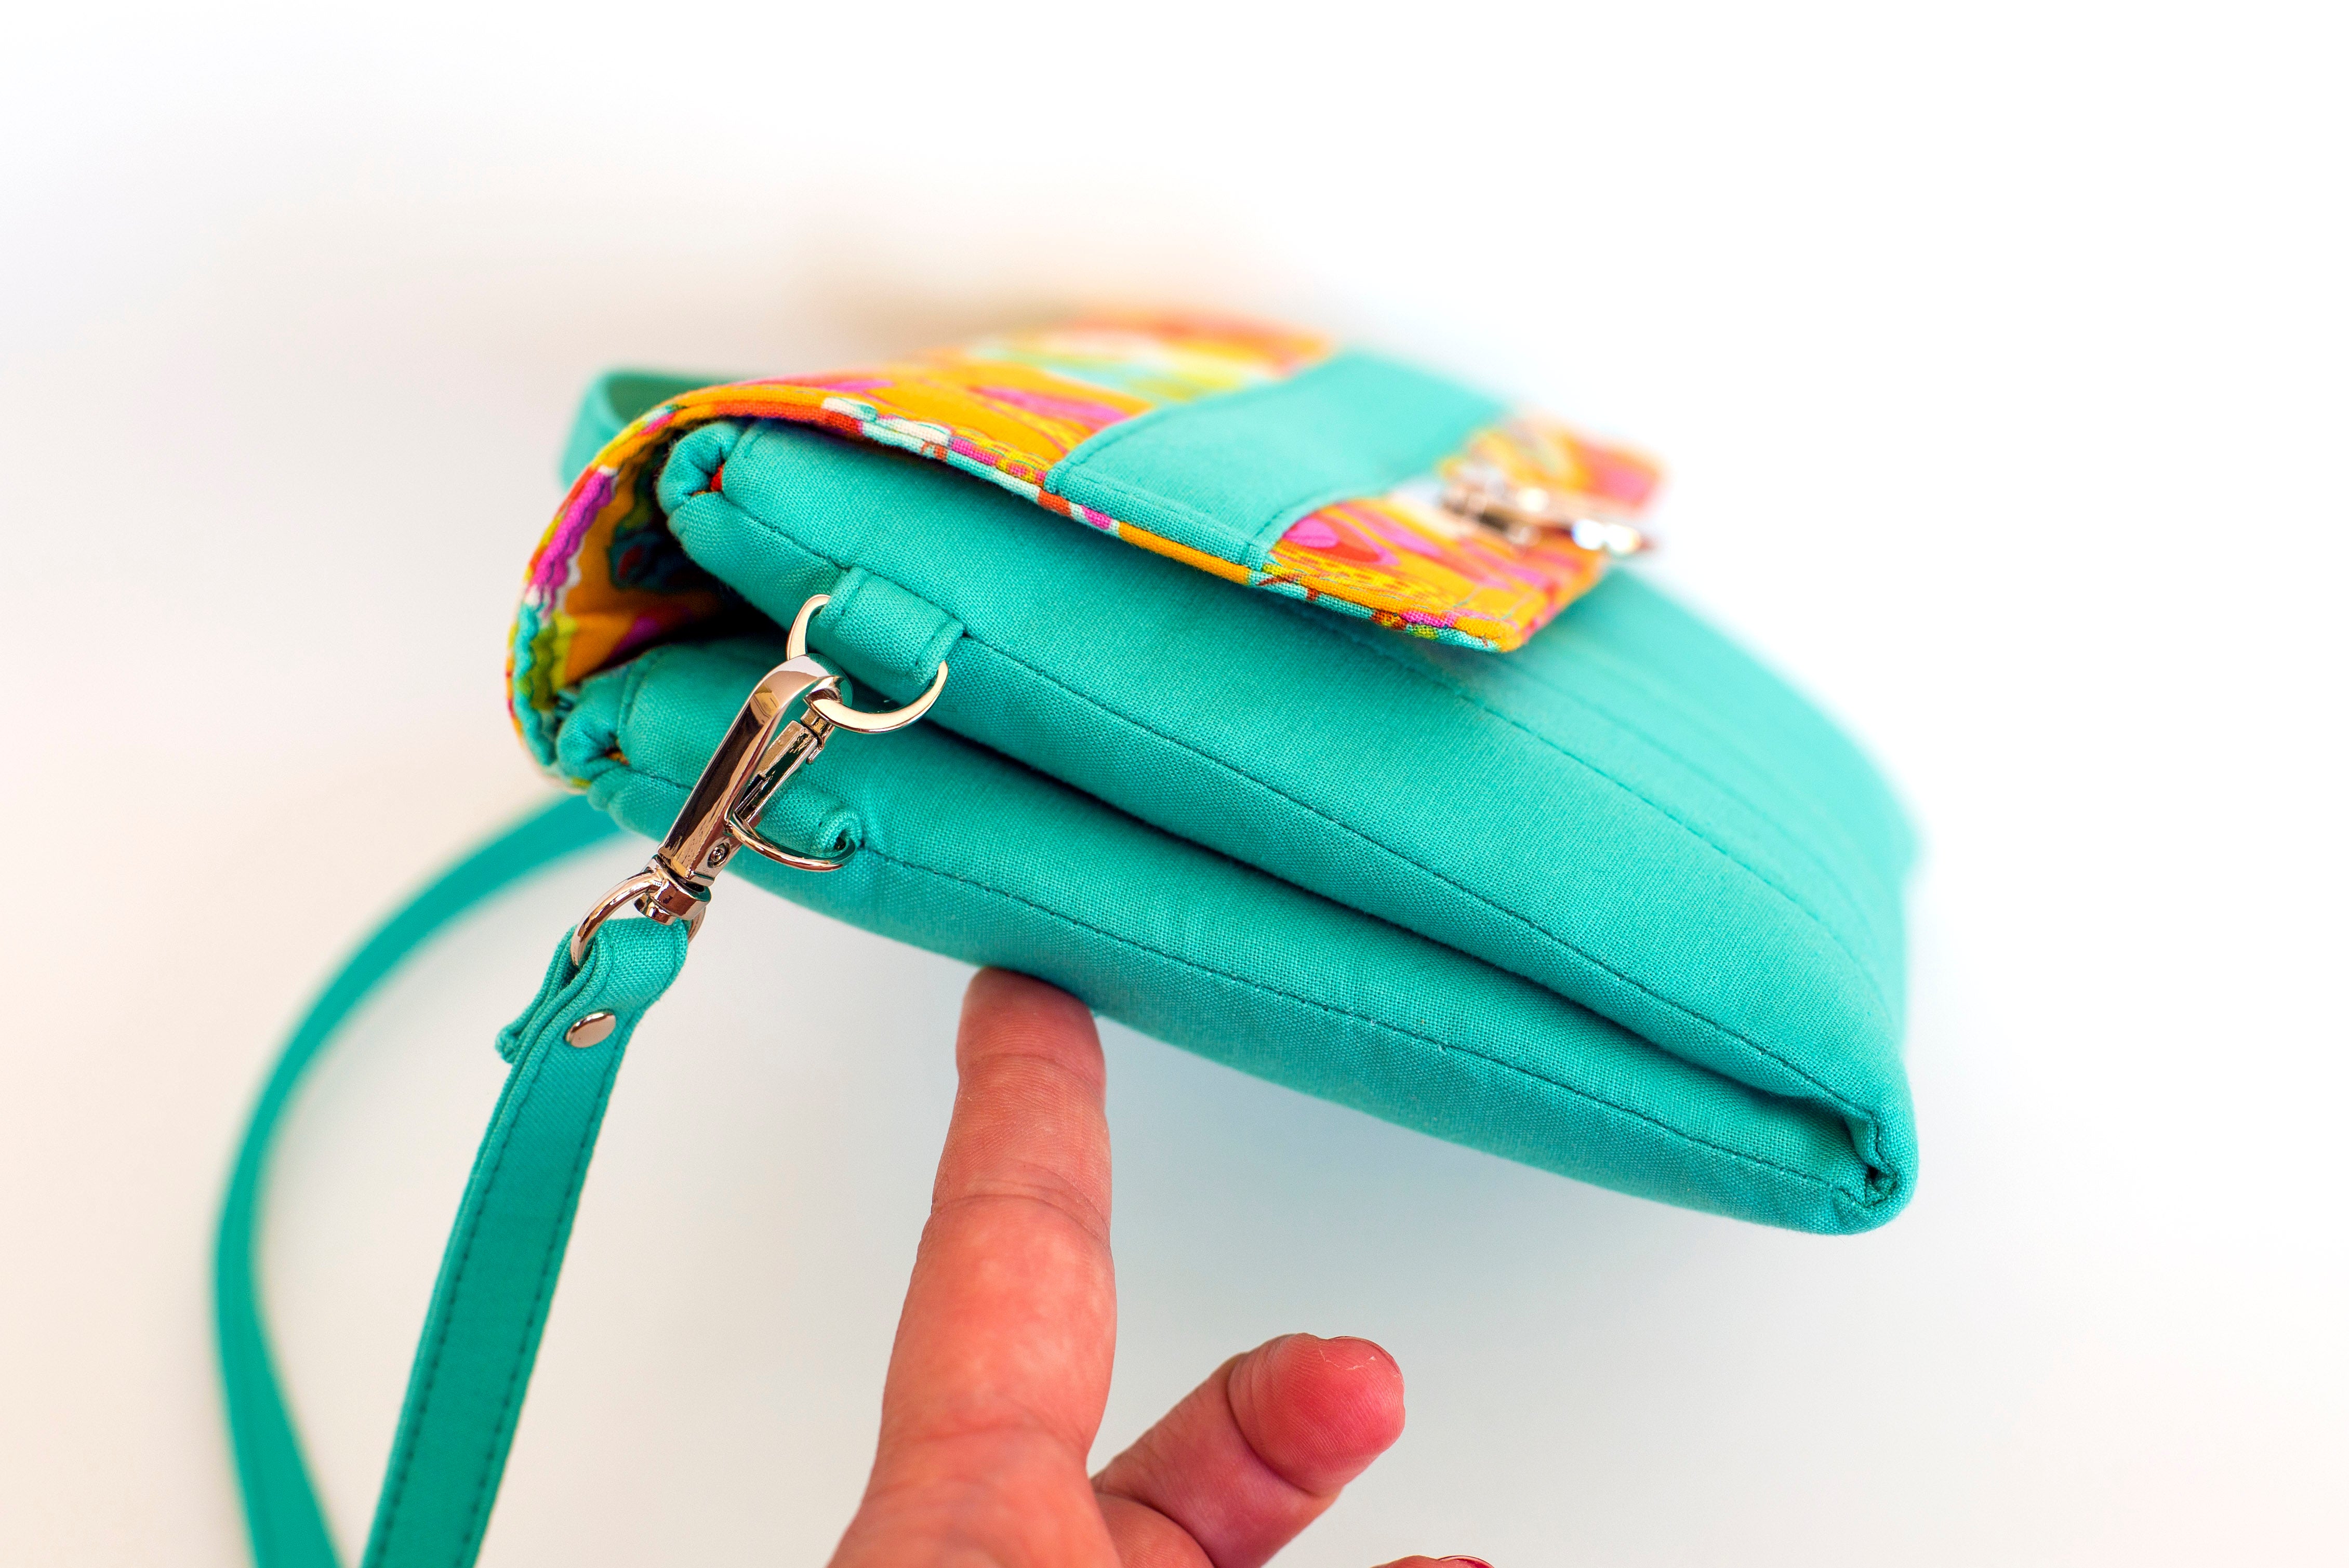 CLUTCH PURSE | Clutch purse pattern, Bag pattern, Leather bag pattern